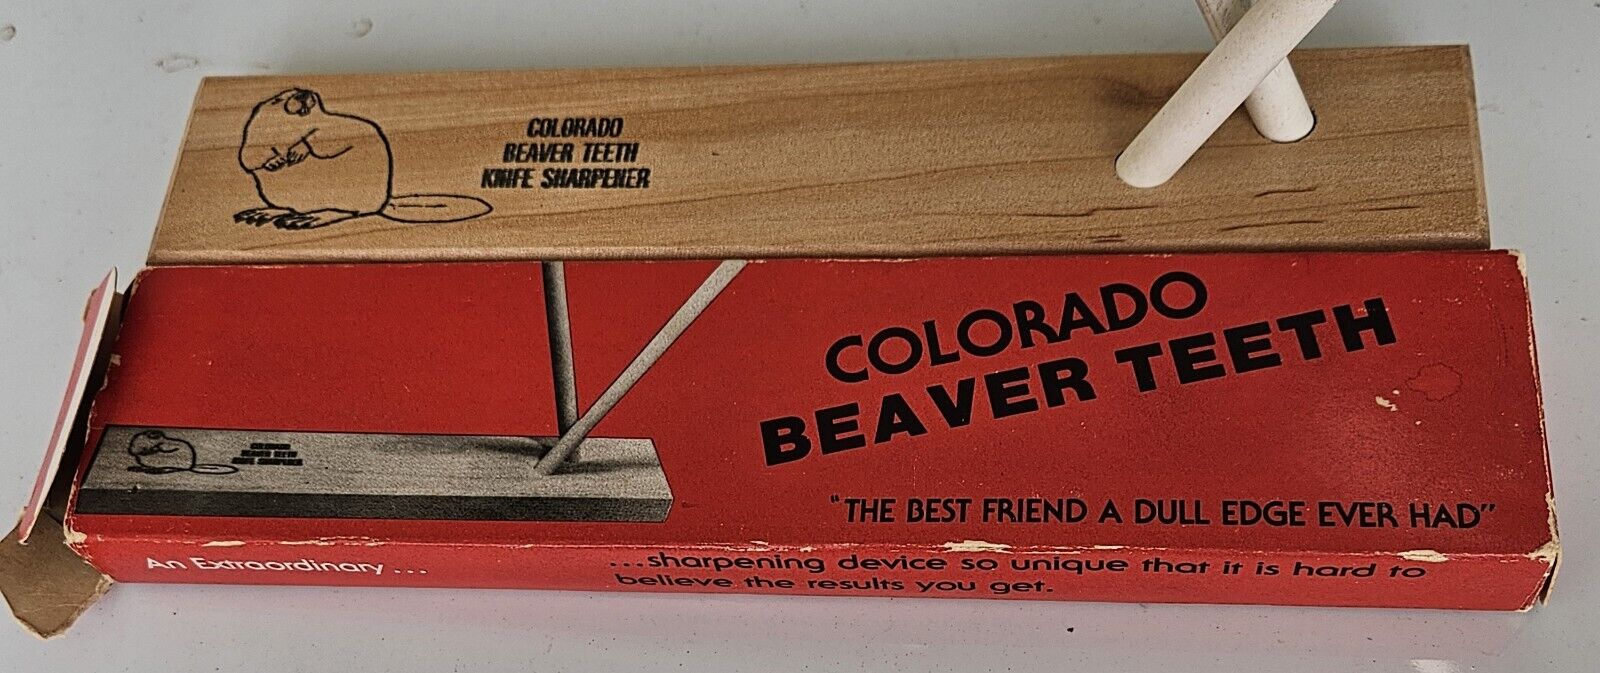 Vintage Colorado Beaver Teeth Knife, Blade Sharpener in Original Box ( 75 1)